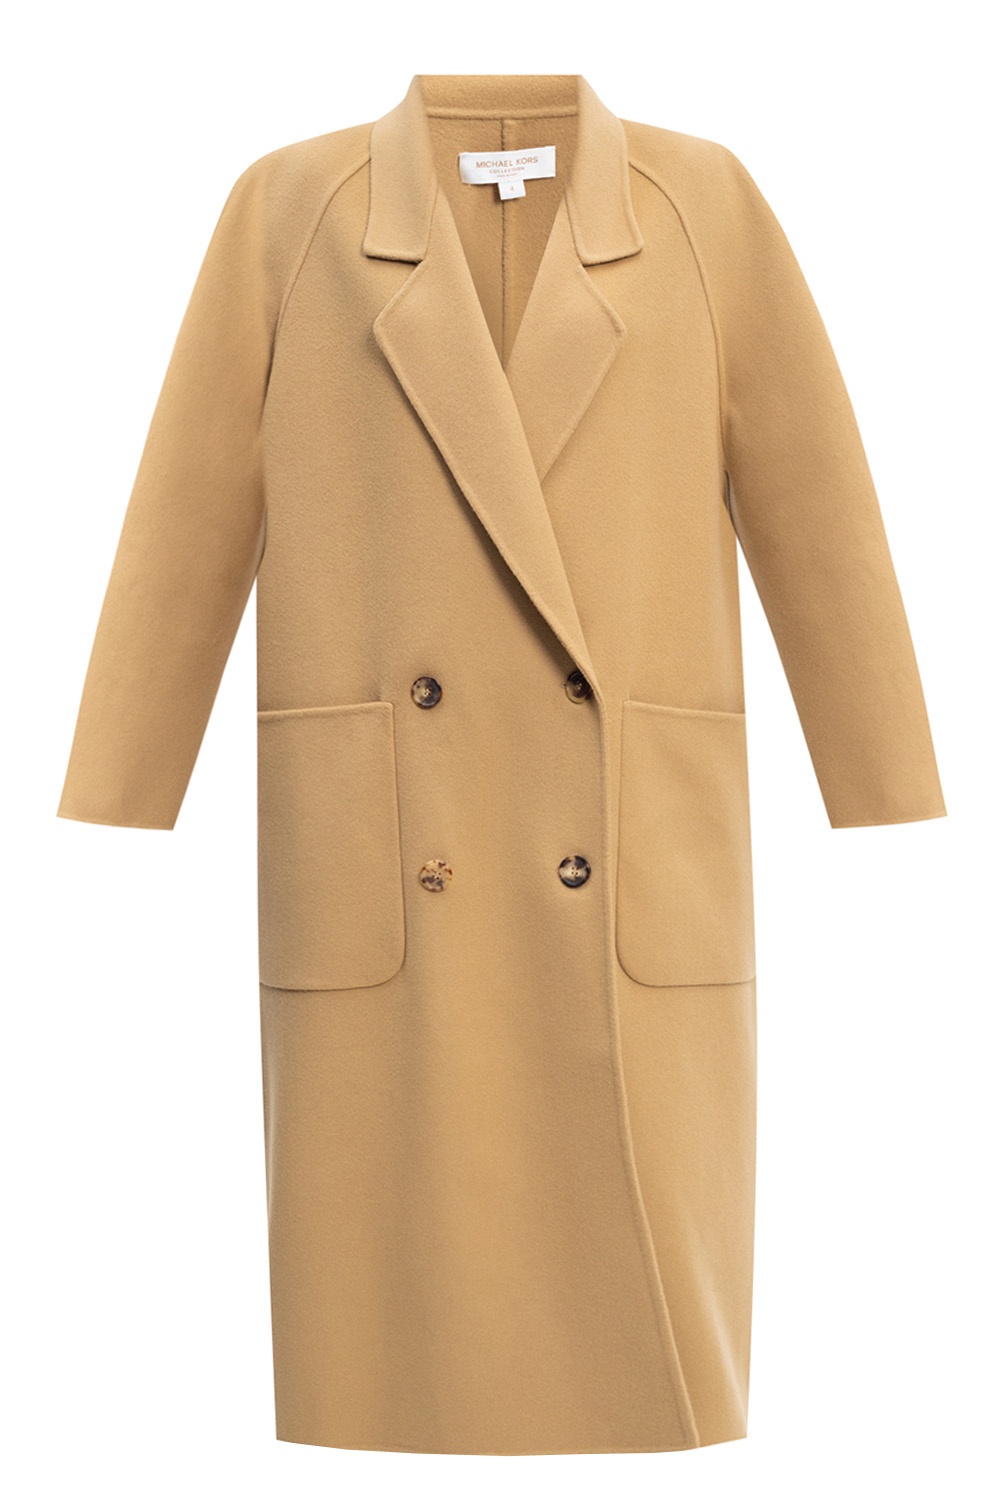 Michael Kors Double-breasted wool coat | Women's Clothing | Vitkac